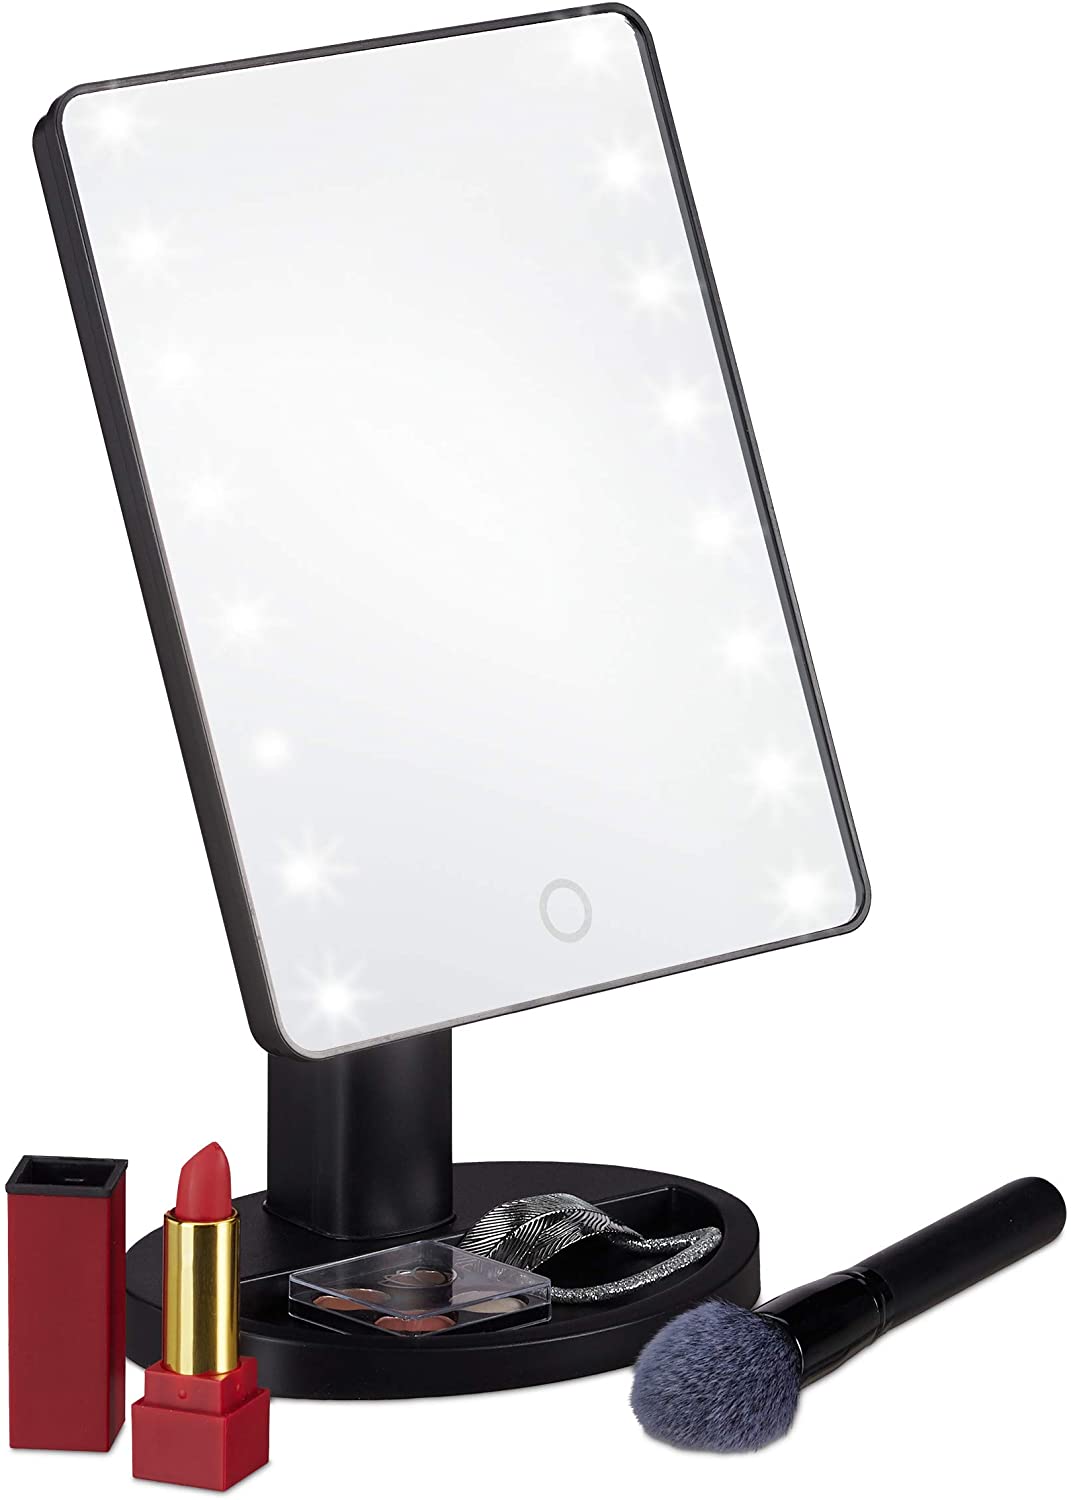 Relaxdays Make-Up Mirror With Led Base Adjustable Illuminated Cosmetic Mirr